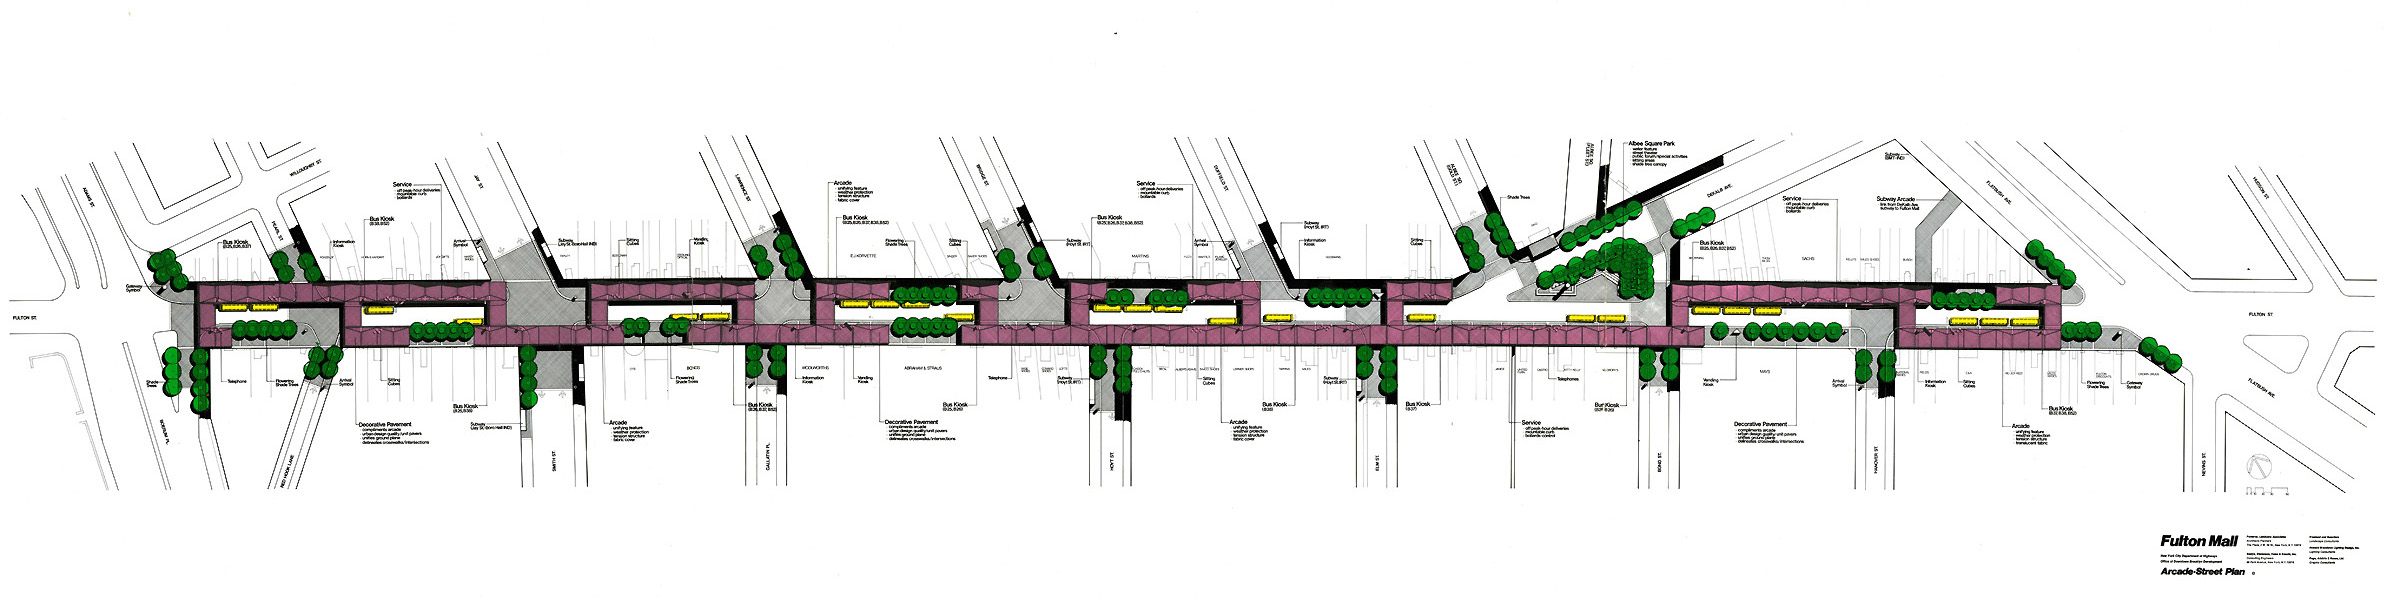 Fulton Street Mall Plan.jpg